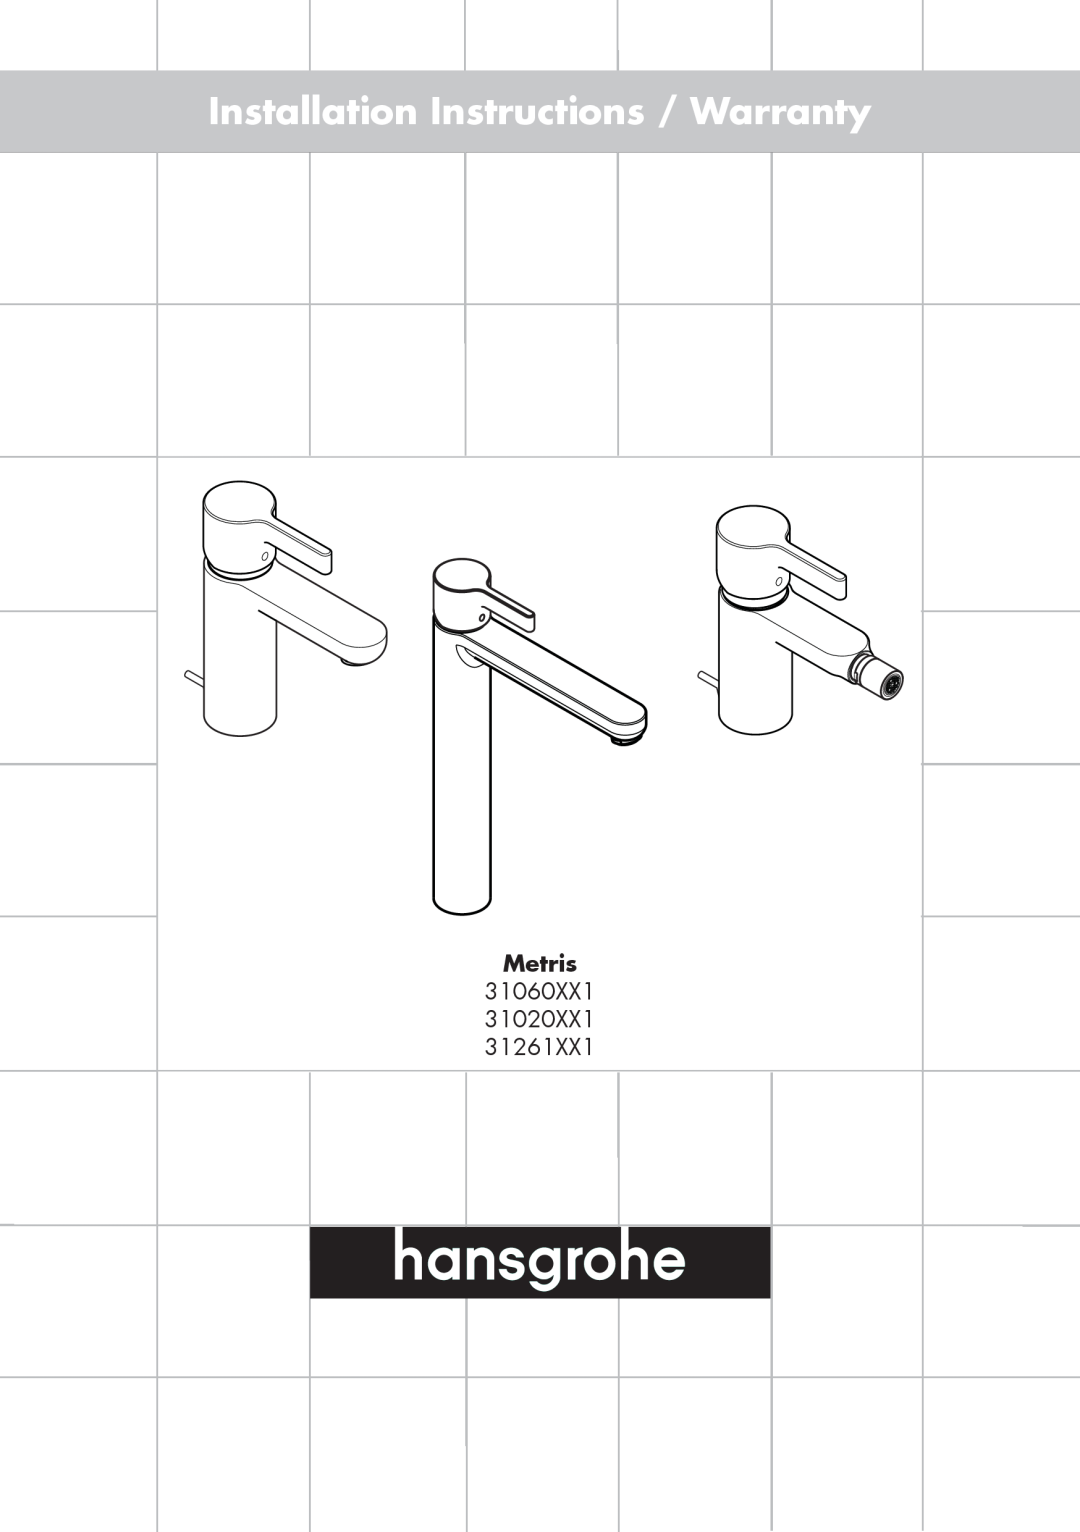 Hans Grohe 31261XX1 installation instructions Metris, Installation Instructions / Warranty 